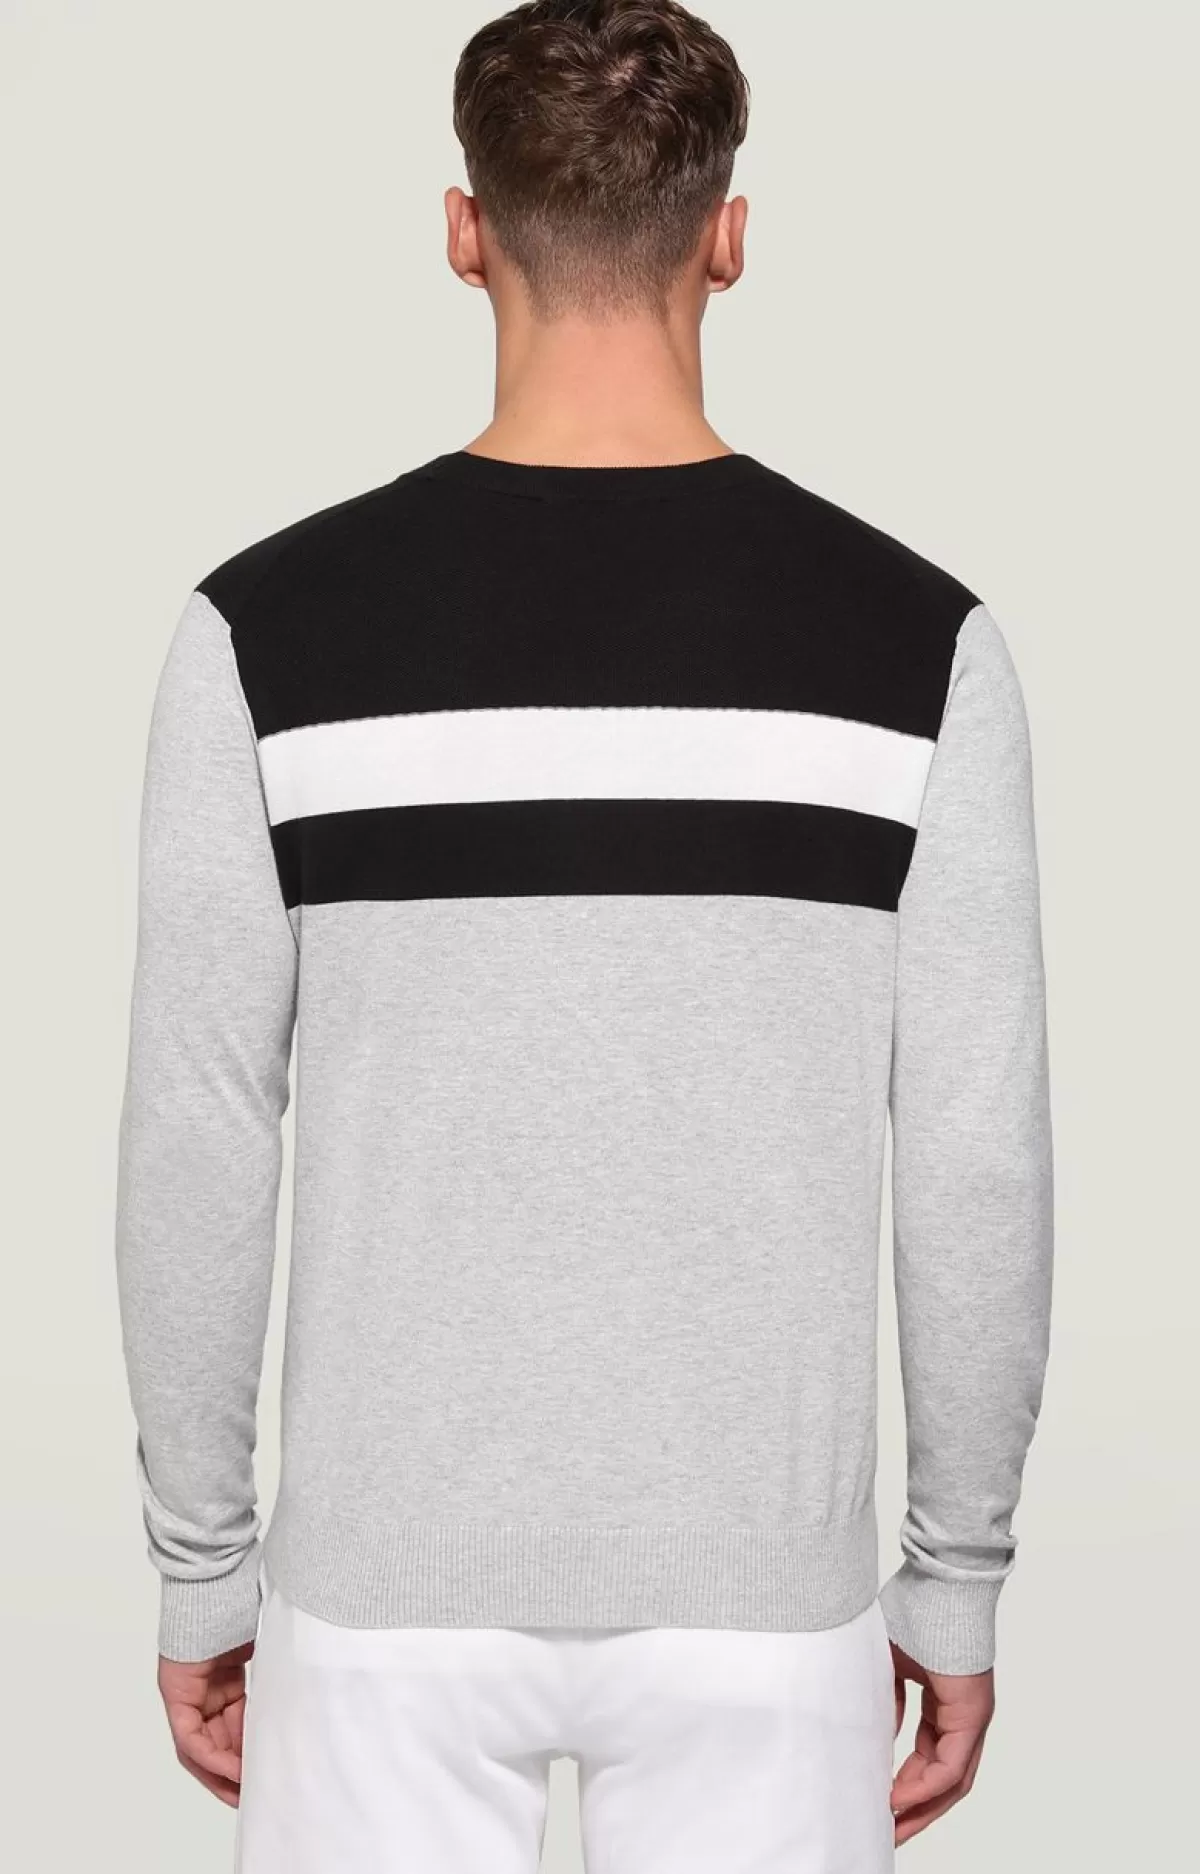 Bikkembergs Men'S Sweater With Jacquard Tape Grey/Black/White/Black Store